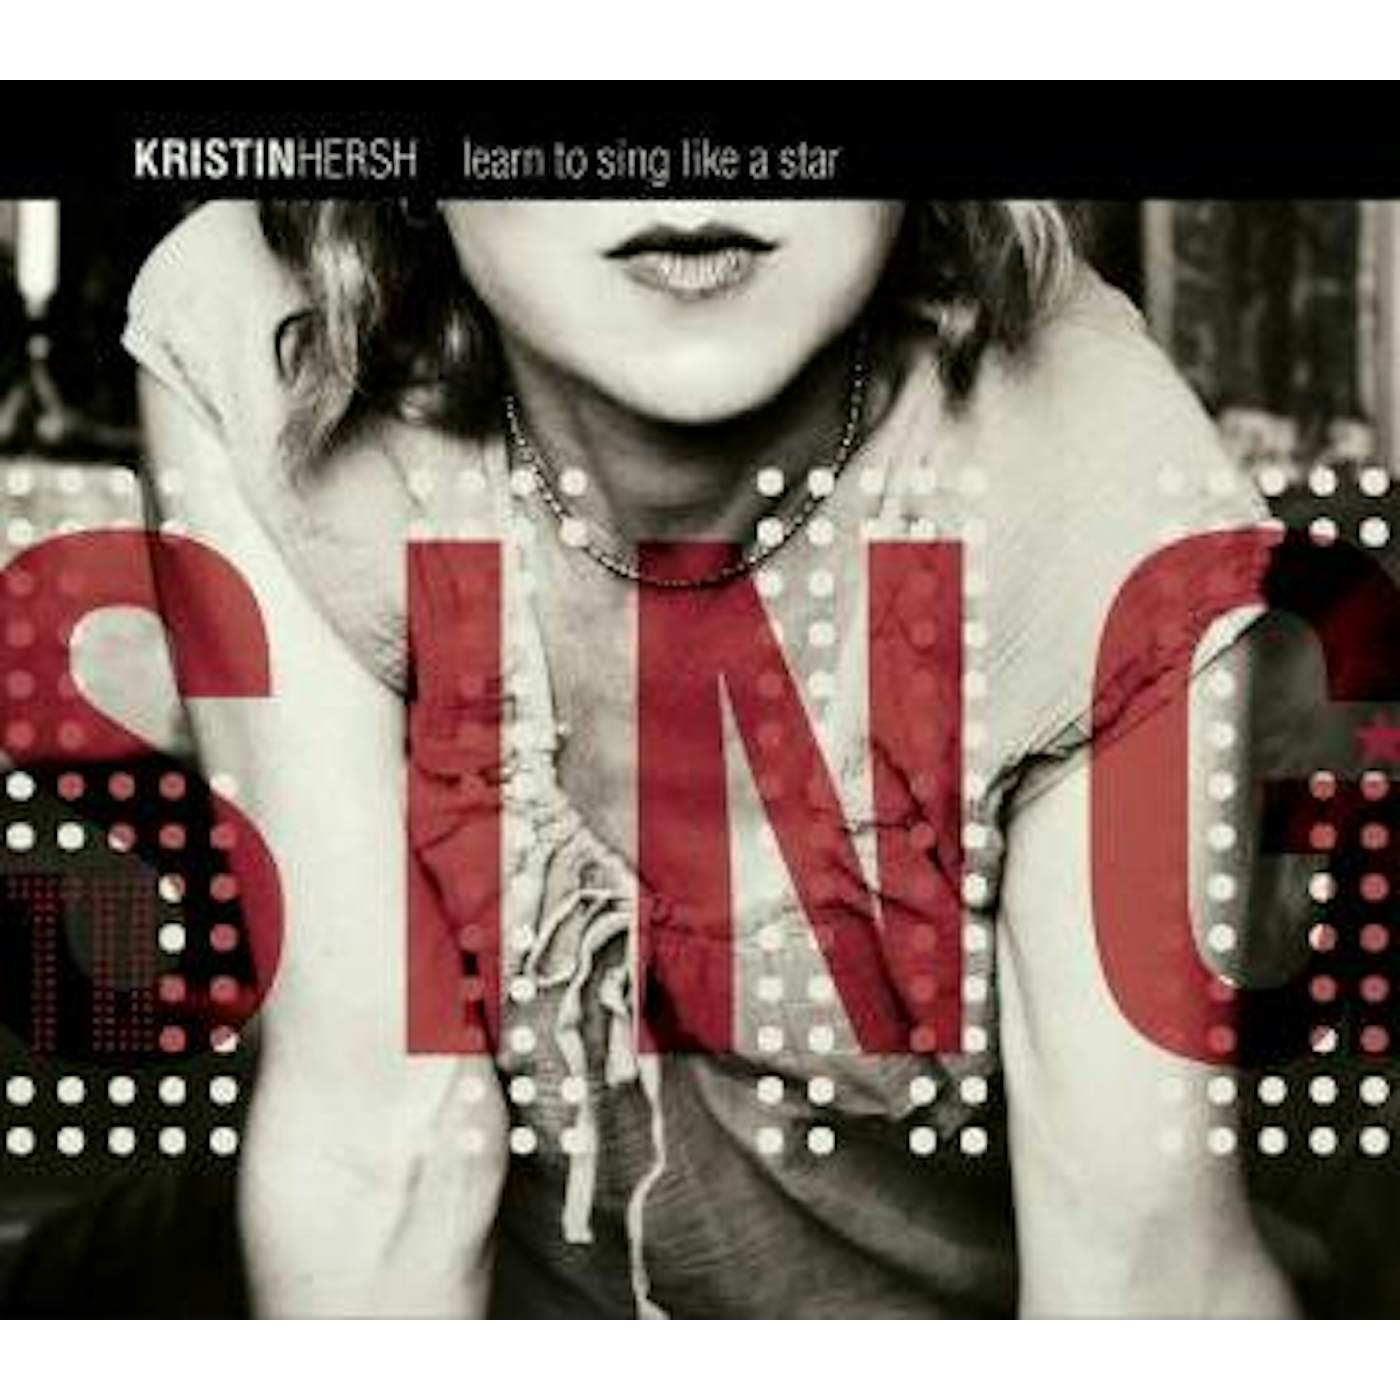 Kristin Hersh LEARN TO SING LIKE A STAR CD